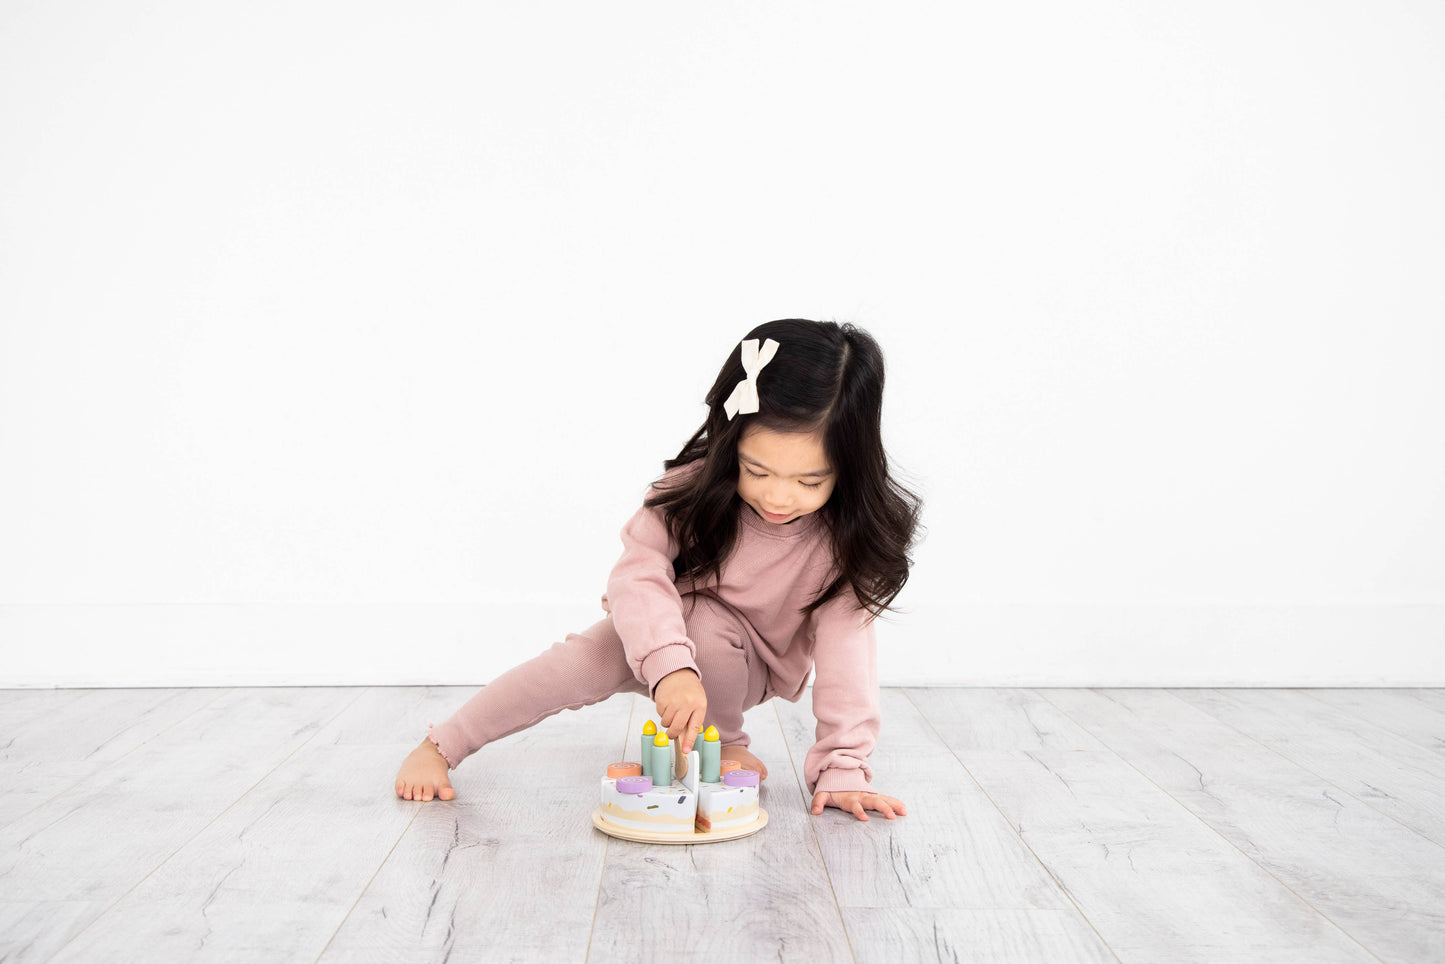 Celebration Wooden Cake Set, Developmental Toys